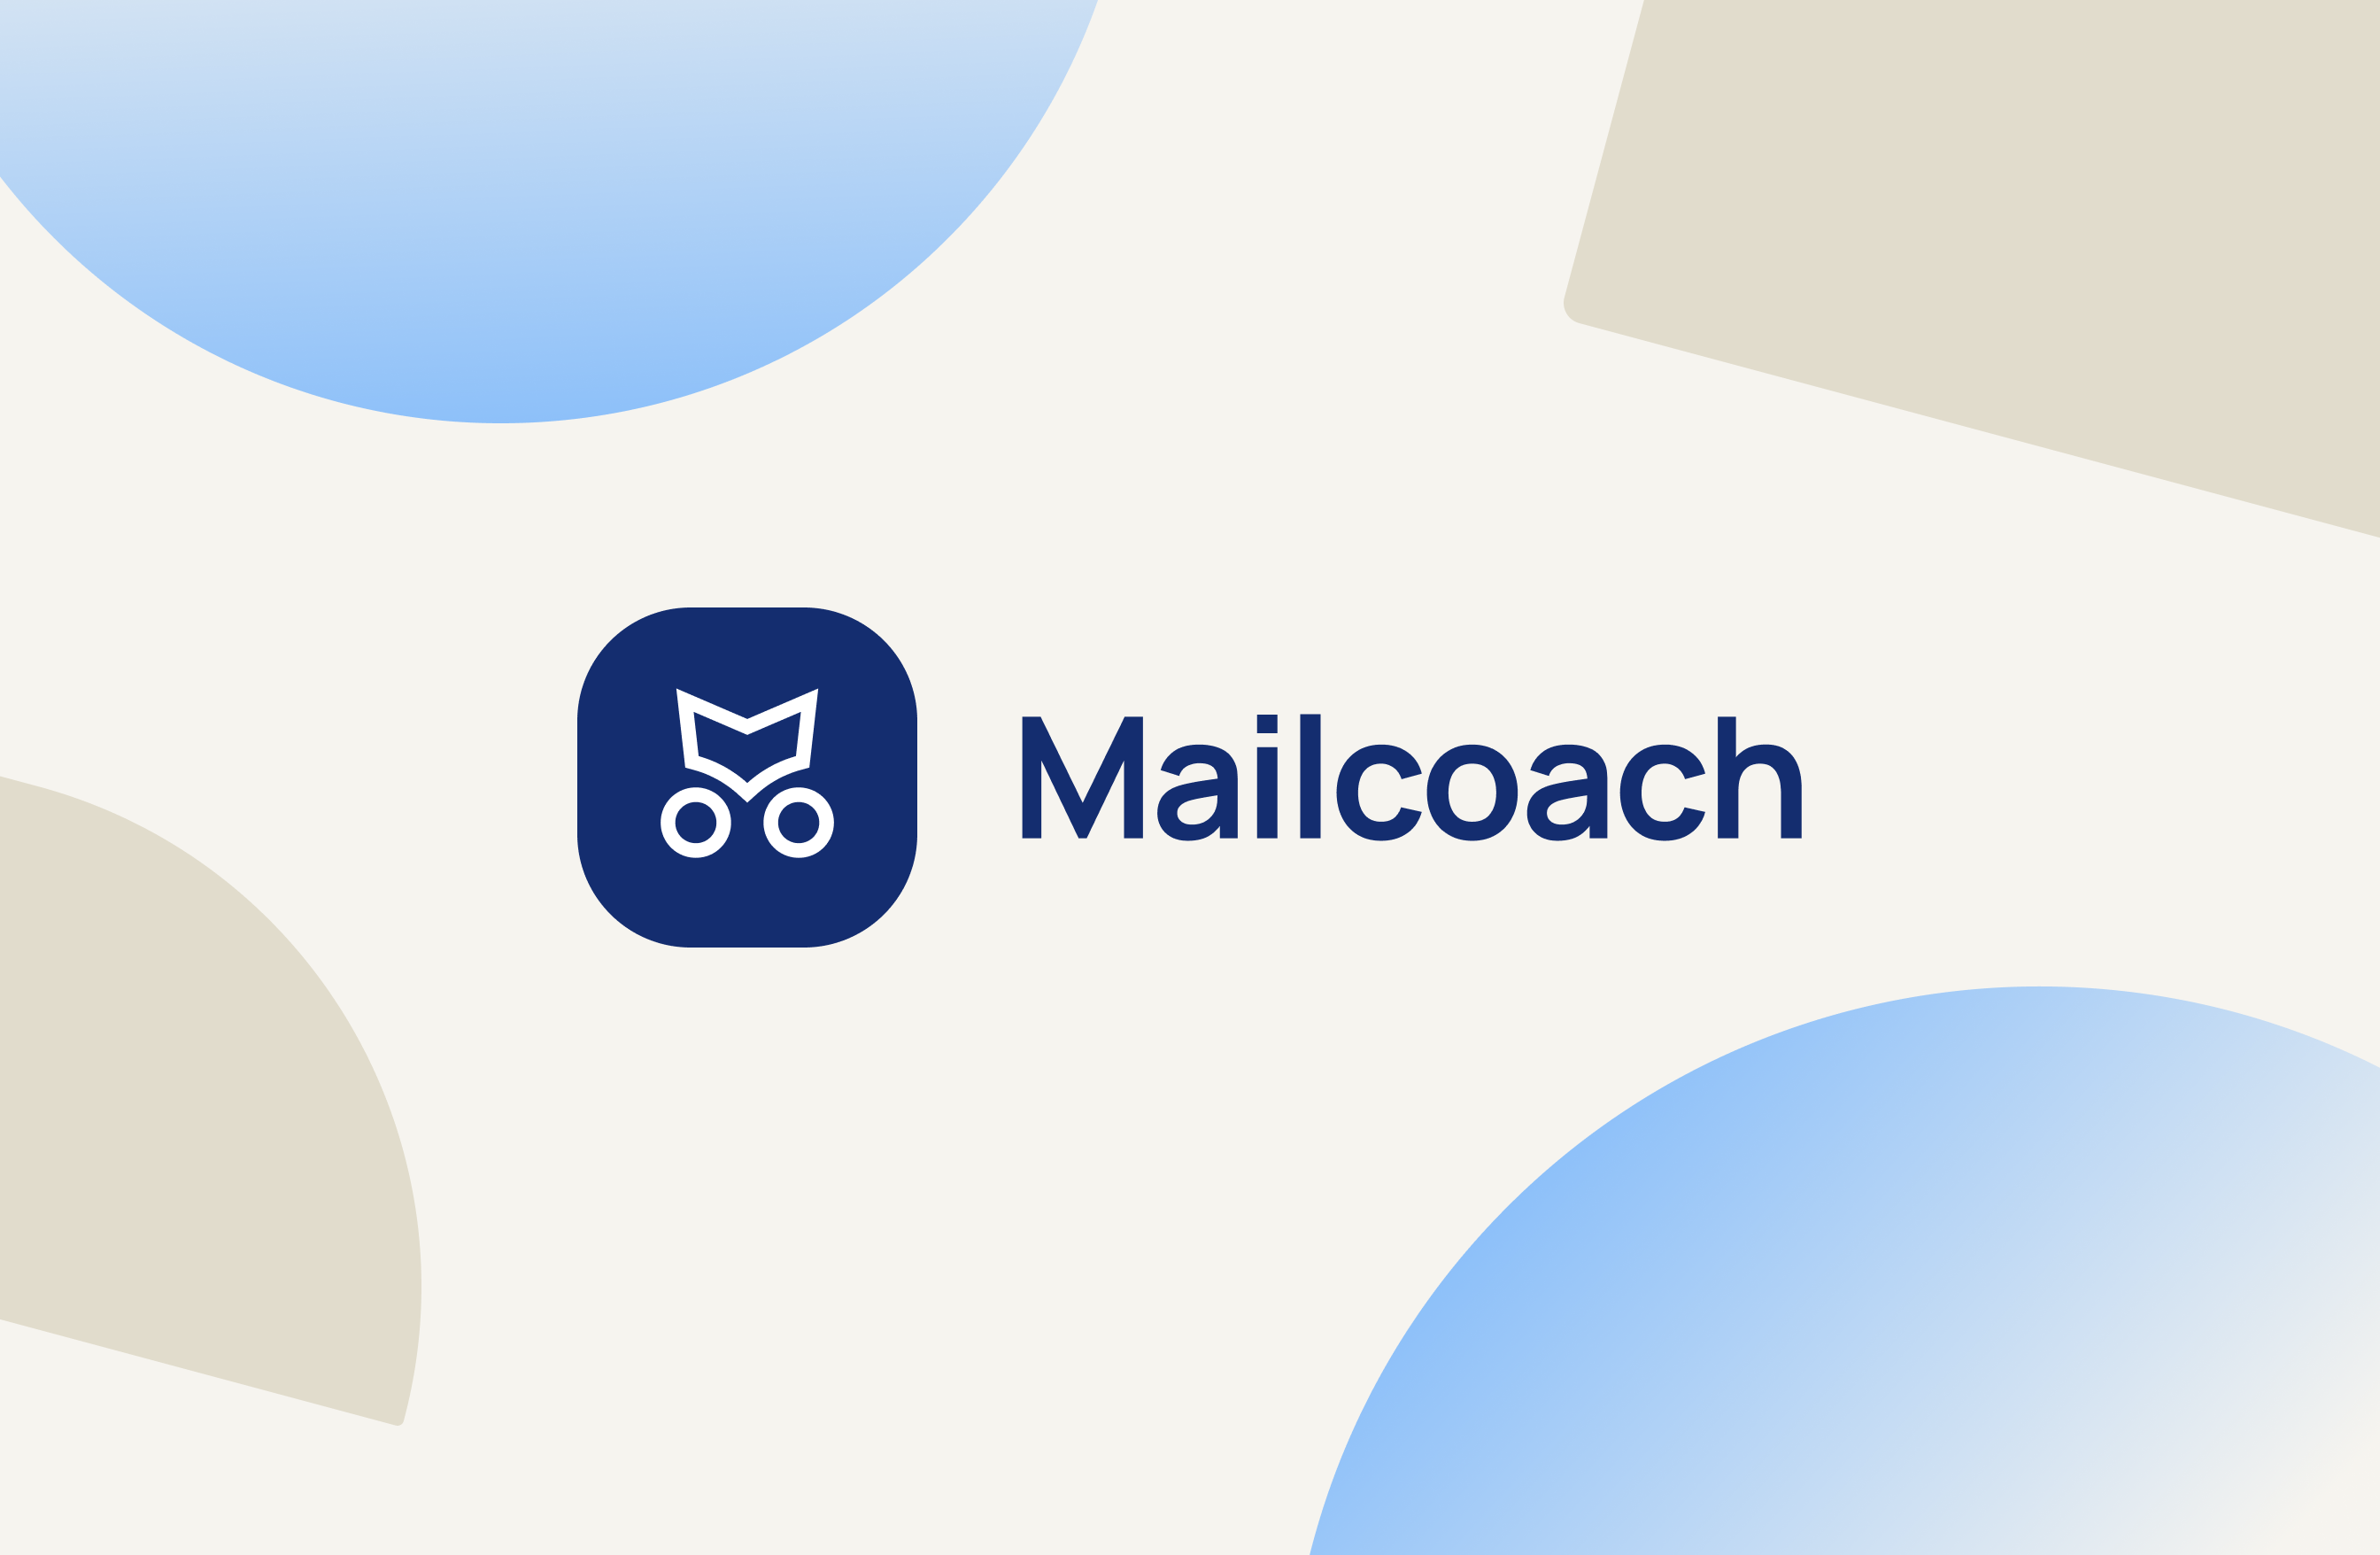 Mailcoach